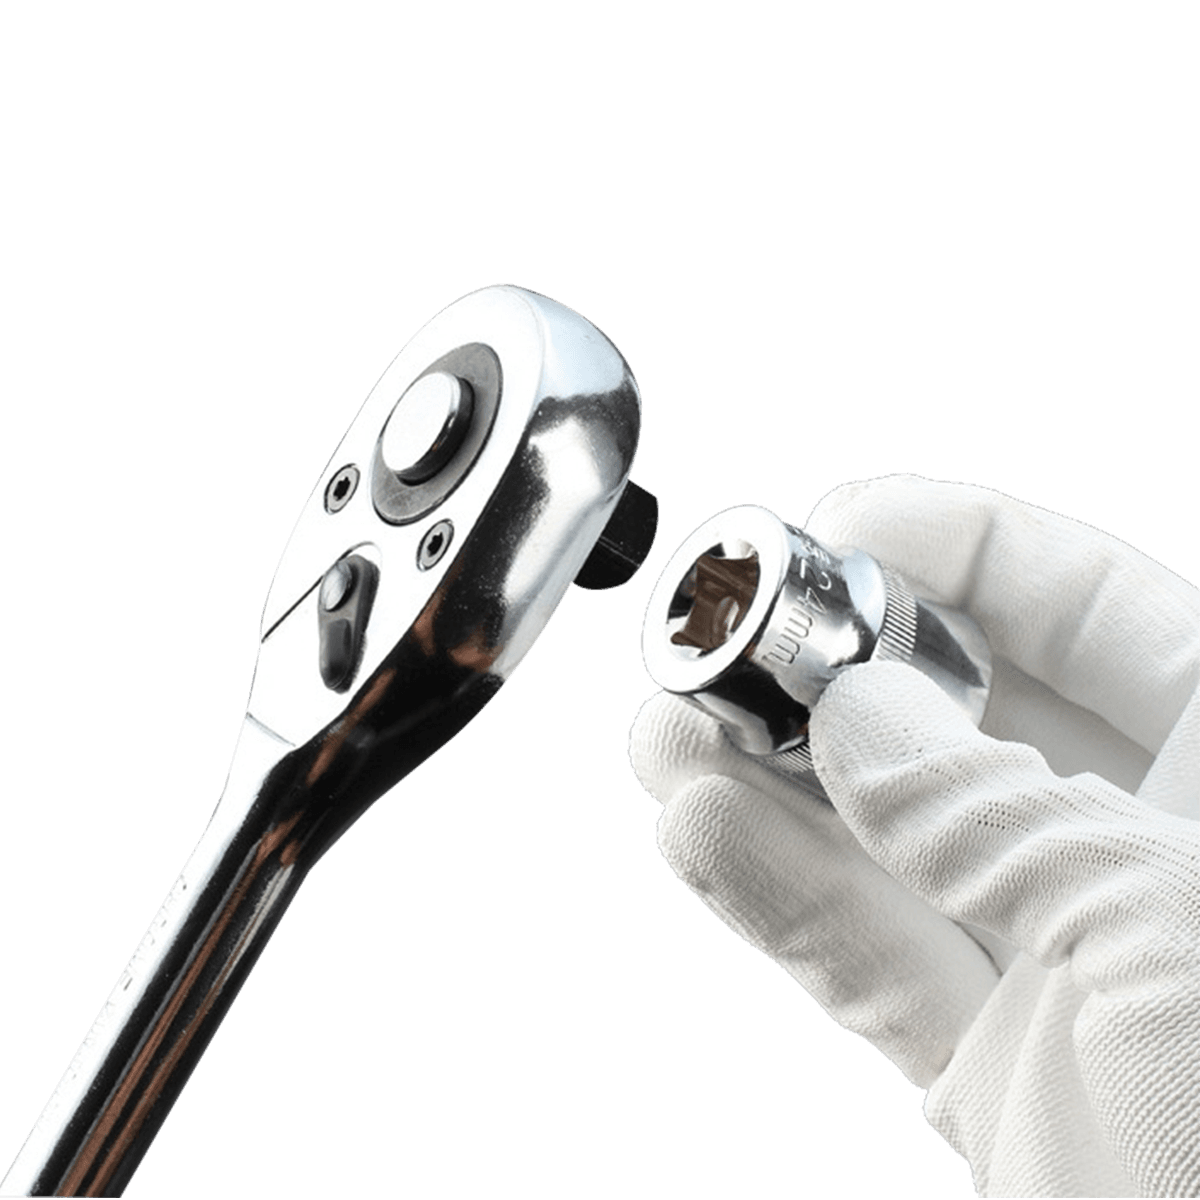 216 Pcs 1/4' & 1/2' & 3/8' Professio Mechanica Repair Socket Wrench Sets Car Reficiendis manibus Tools